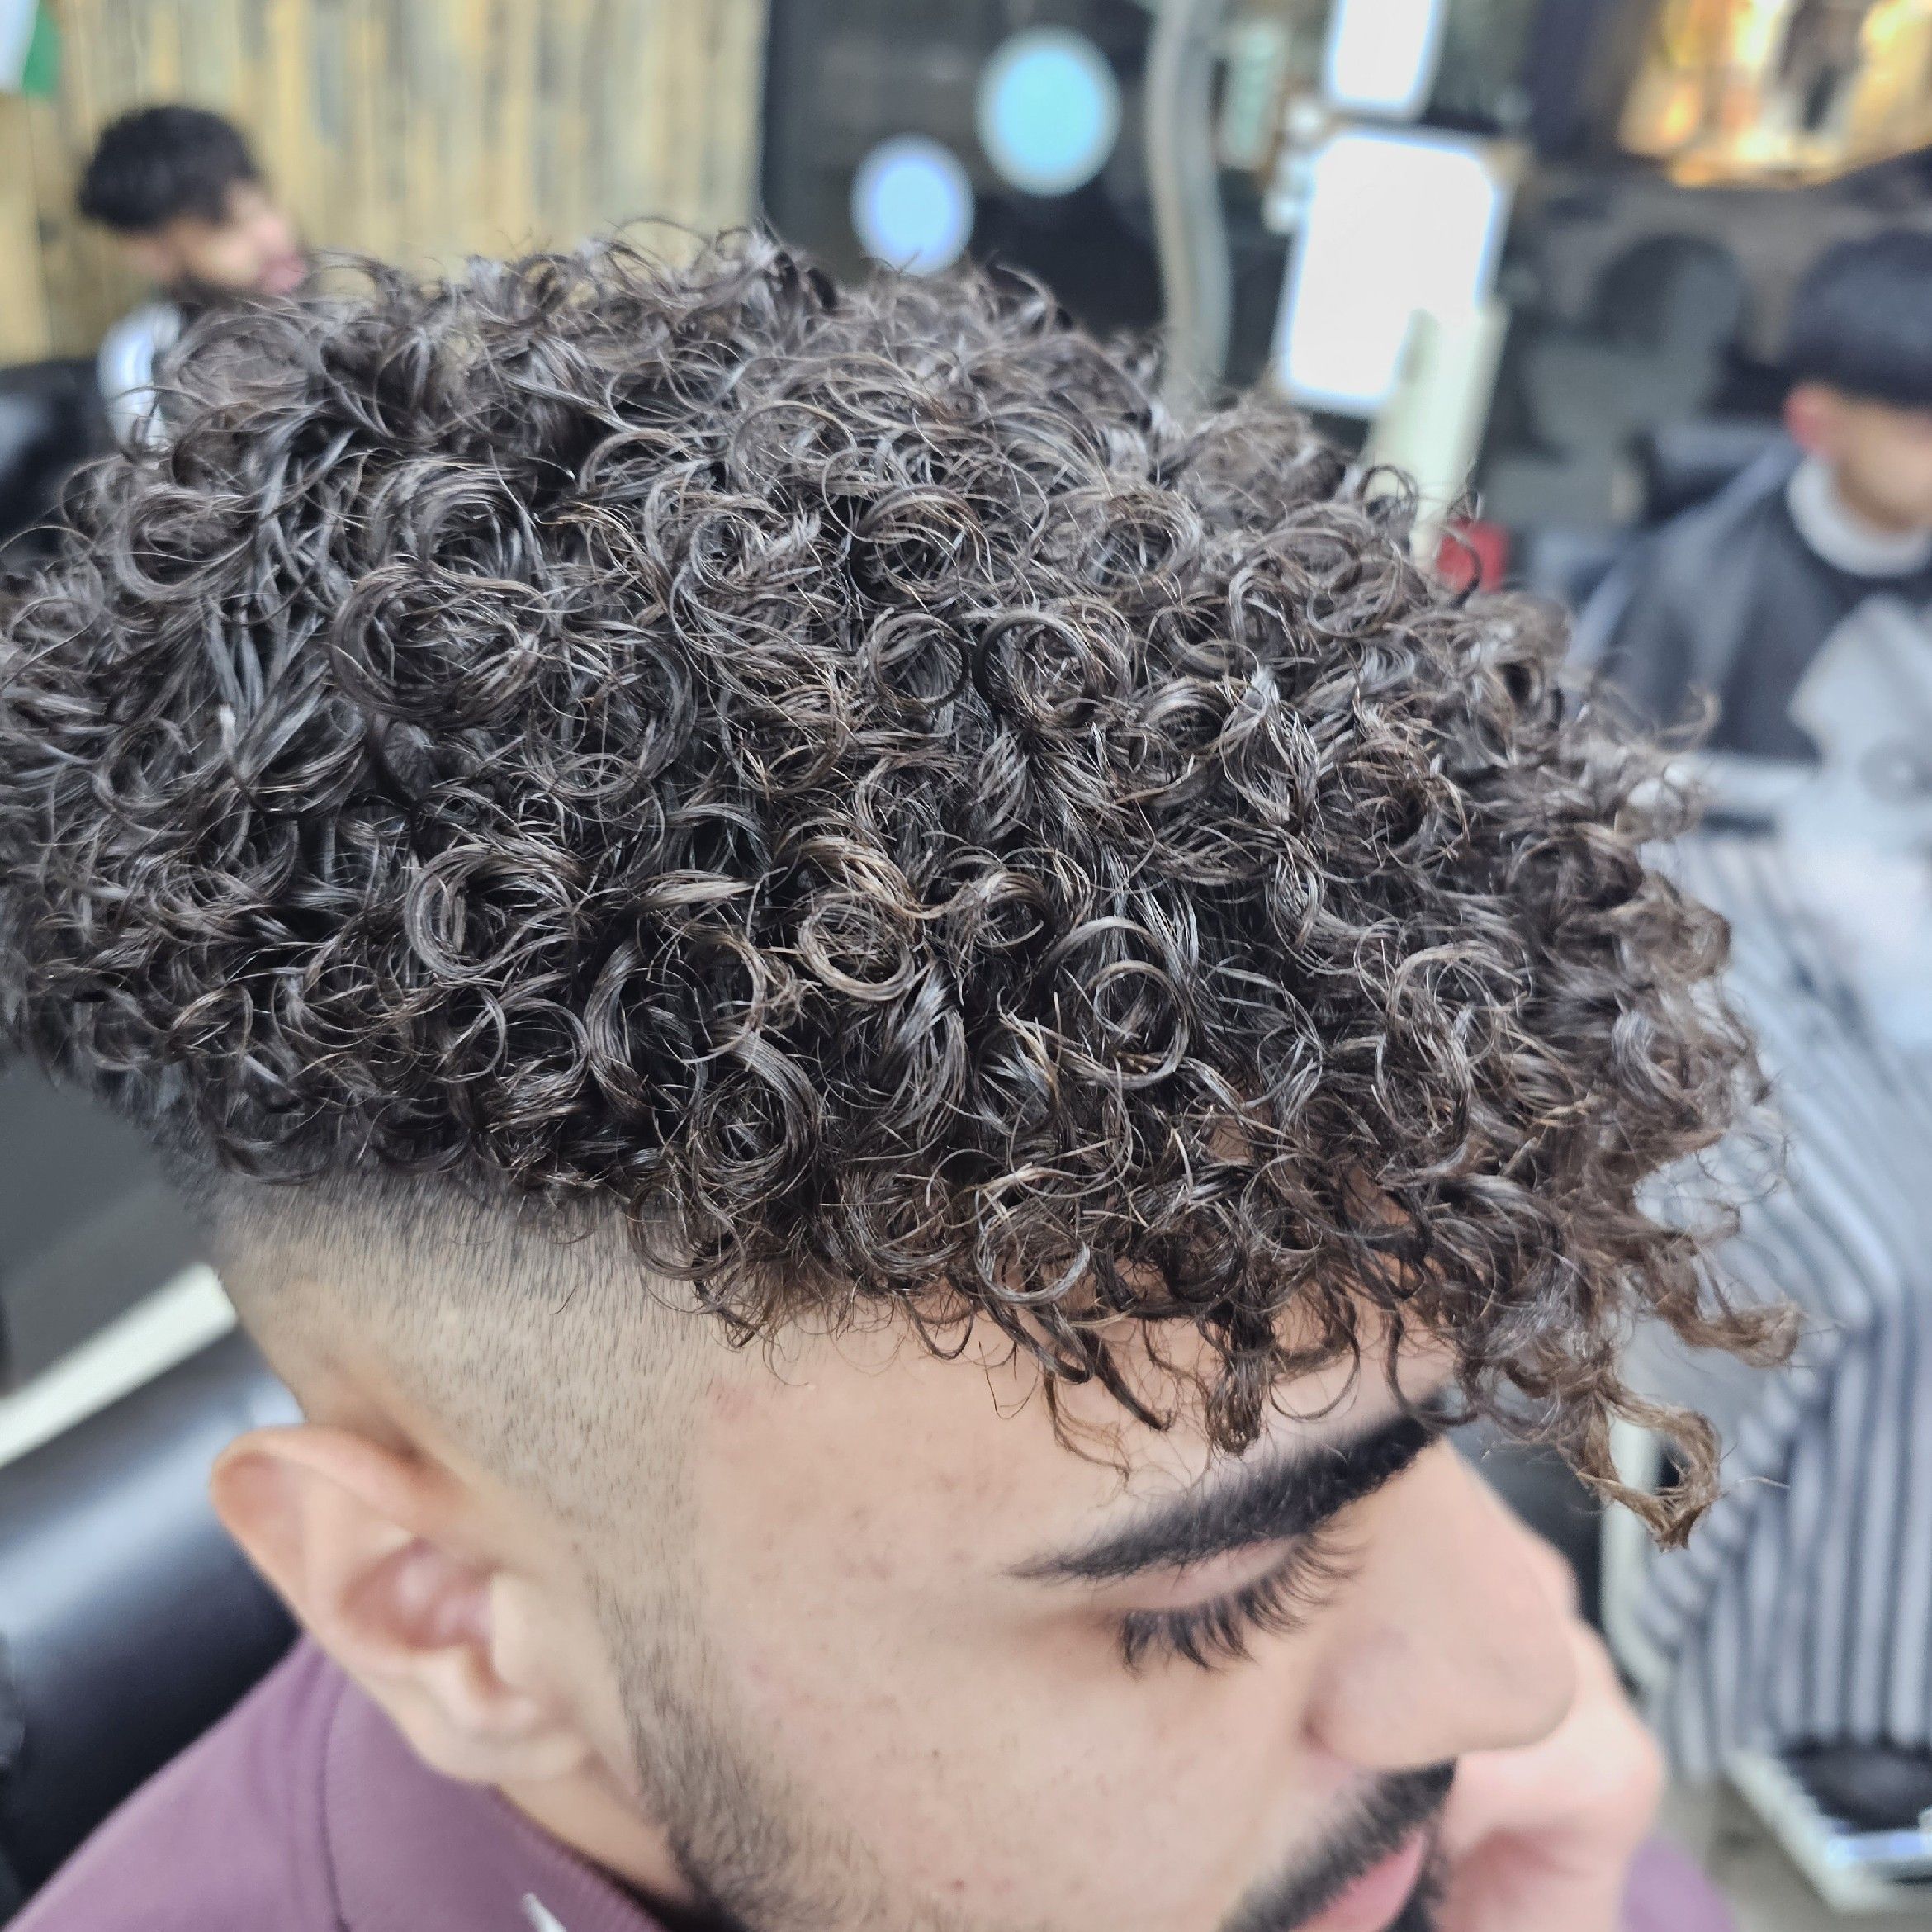 perm+haircut and beard trim portfolio